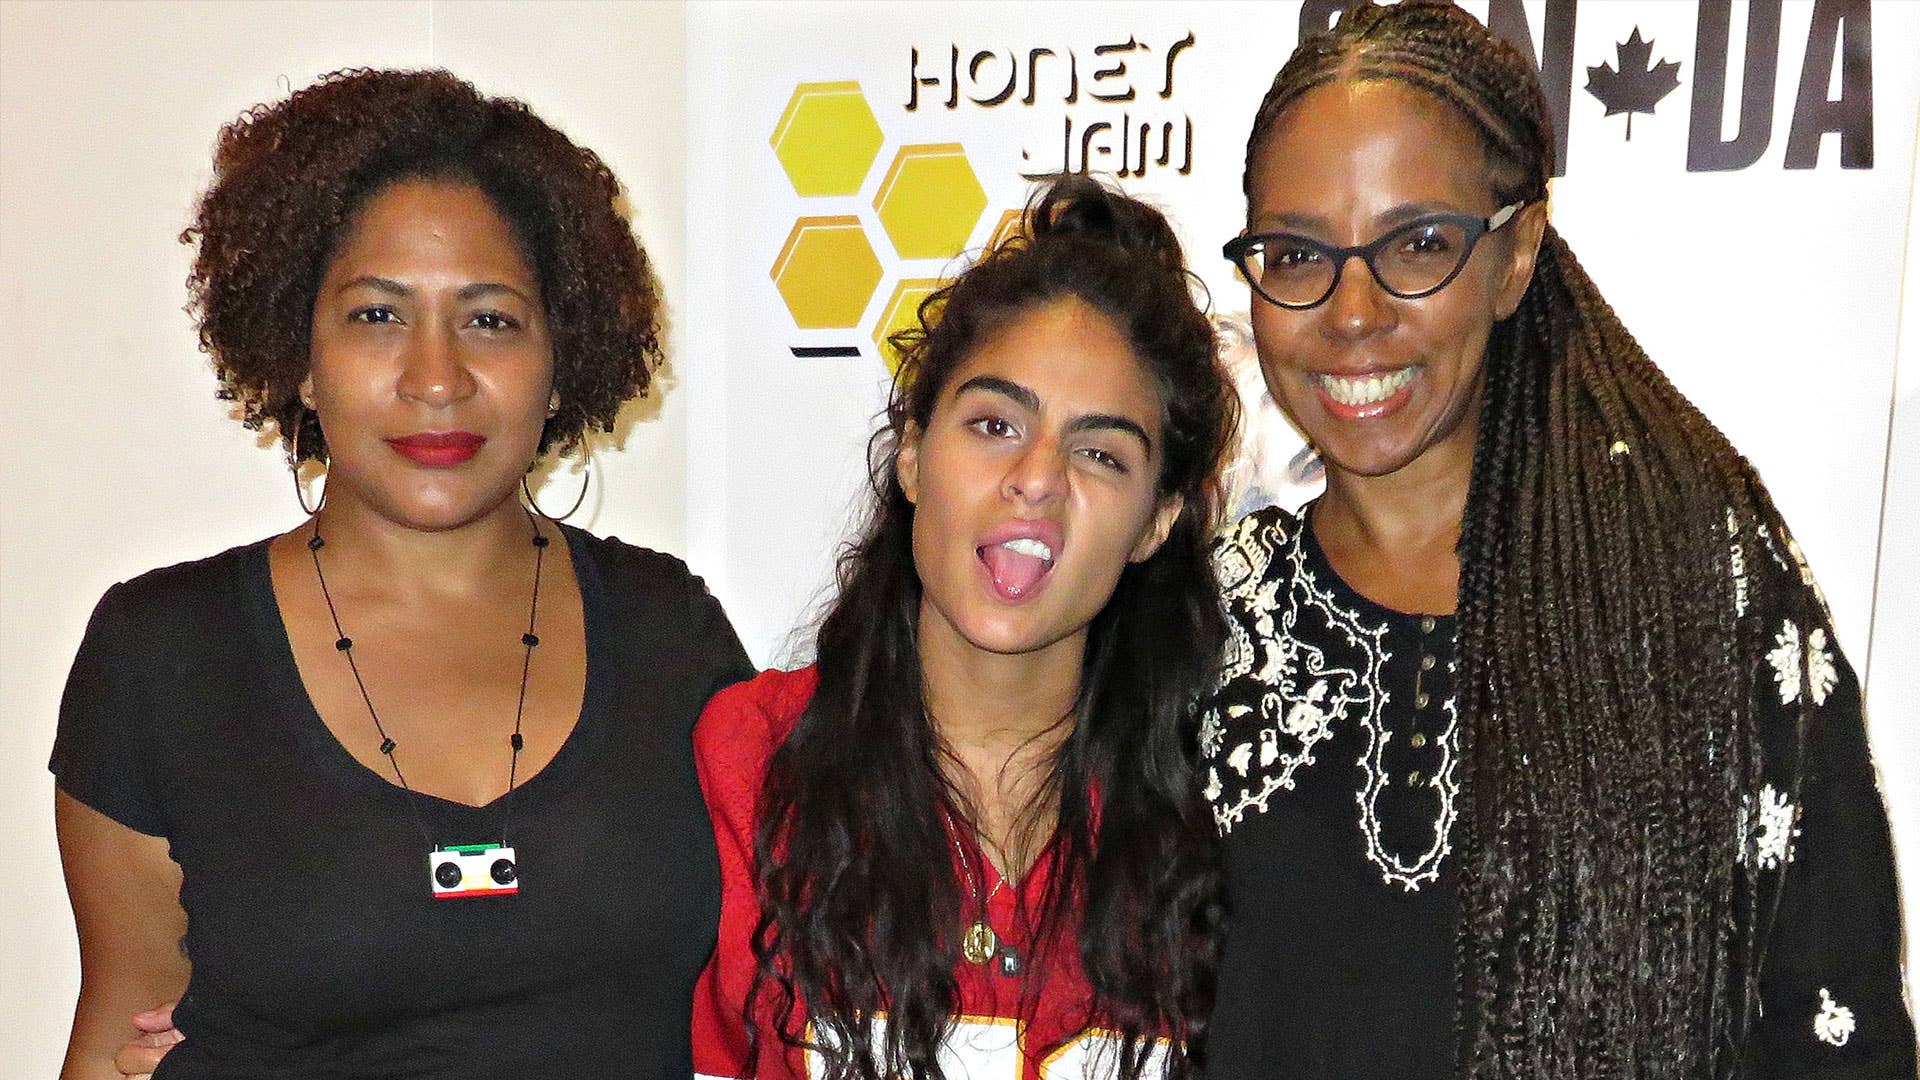 Honey Jam Canada Concert Launches with Guest Speaker Melanie Fiona